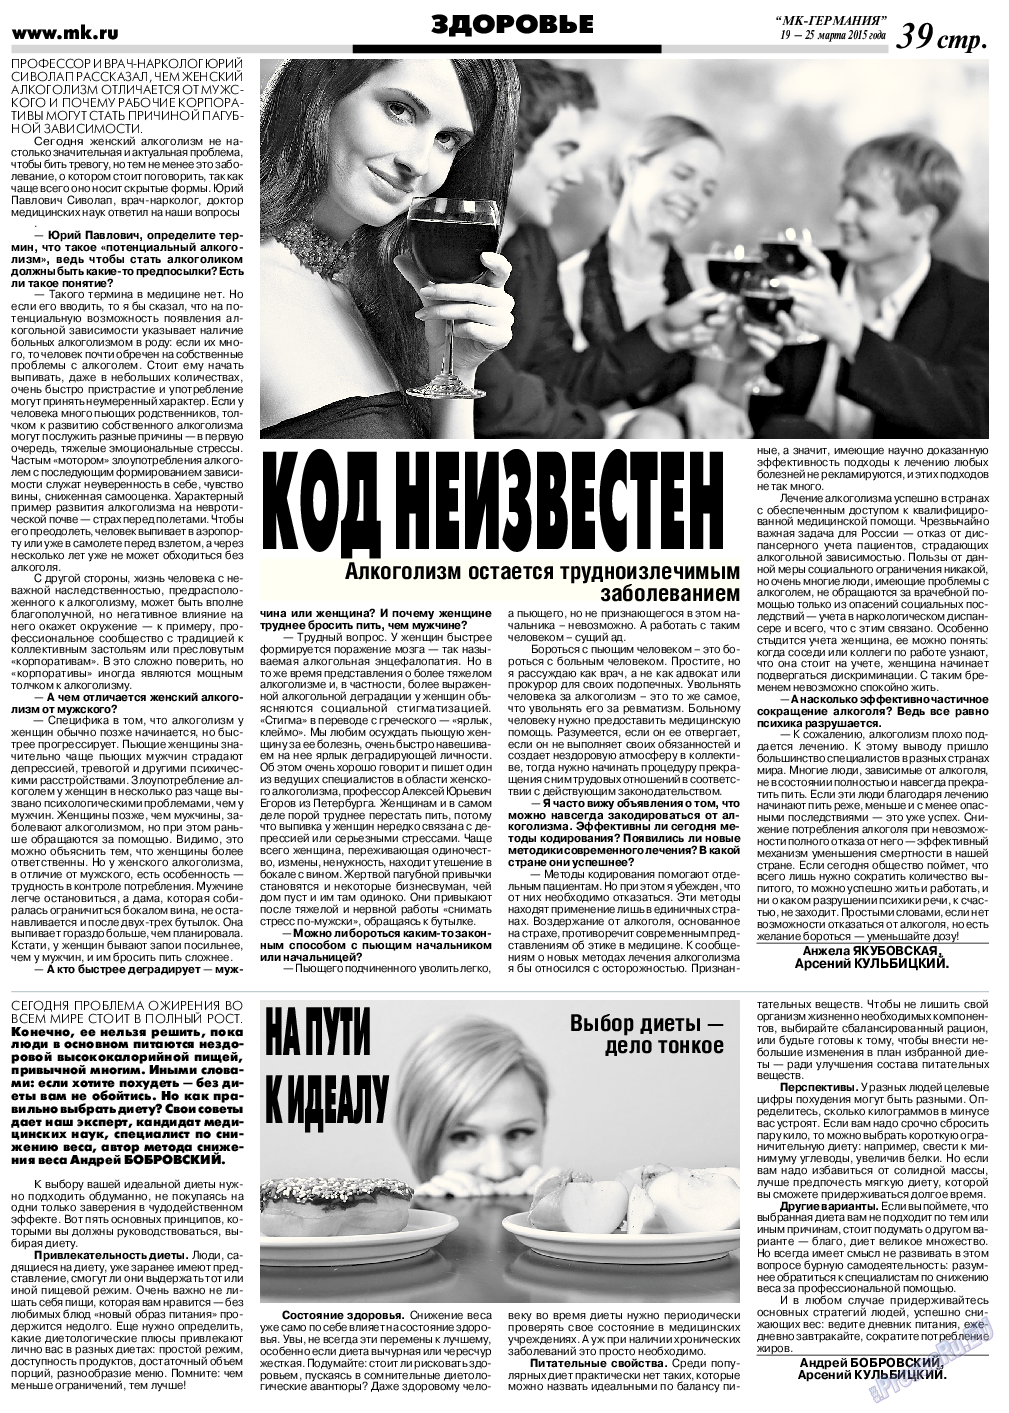 МК-Германия, газета. 2015 №12 стр.39